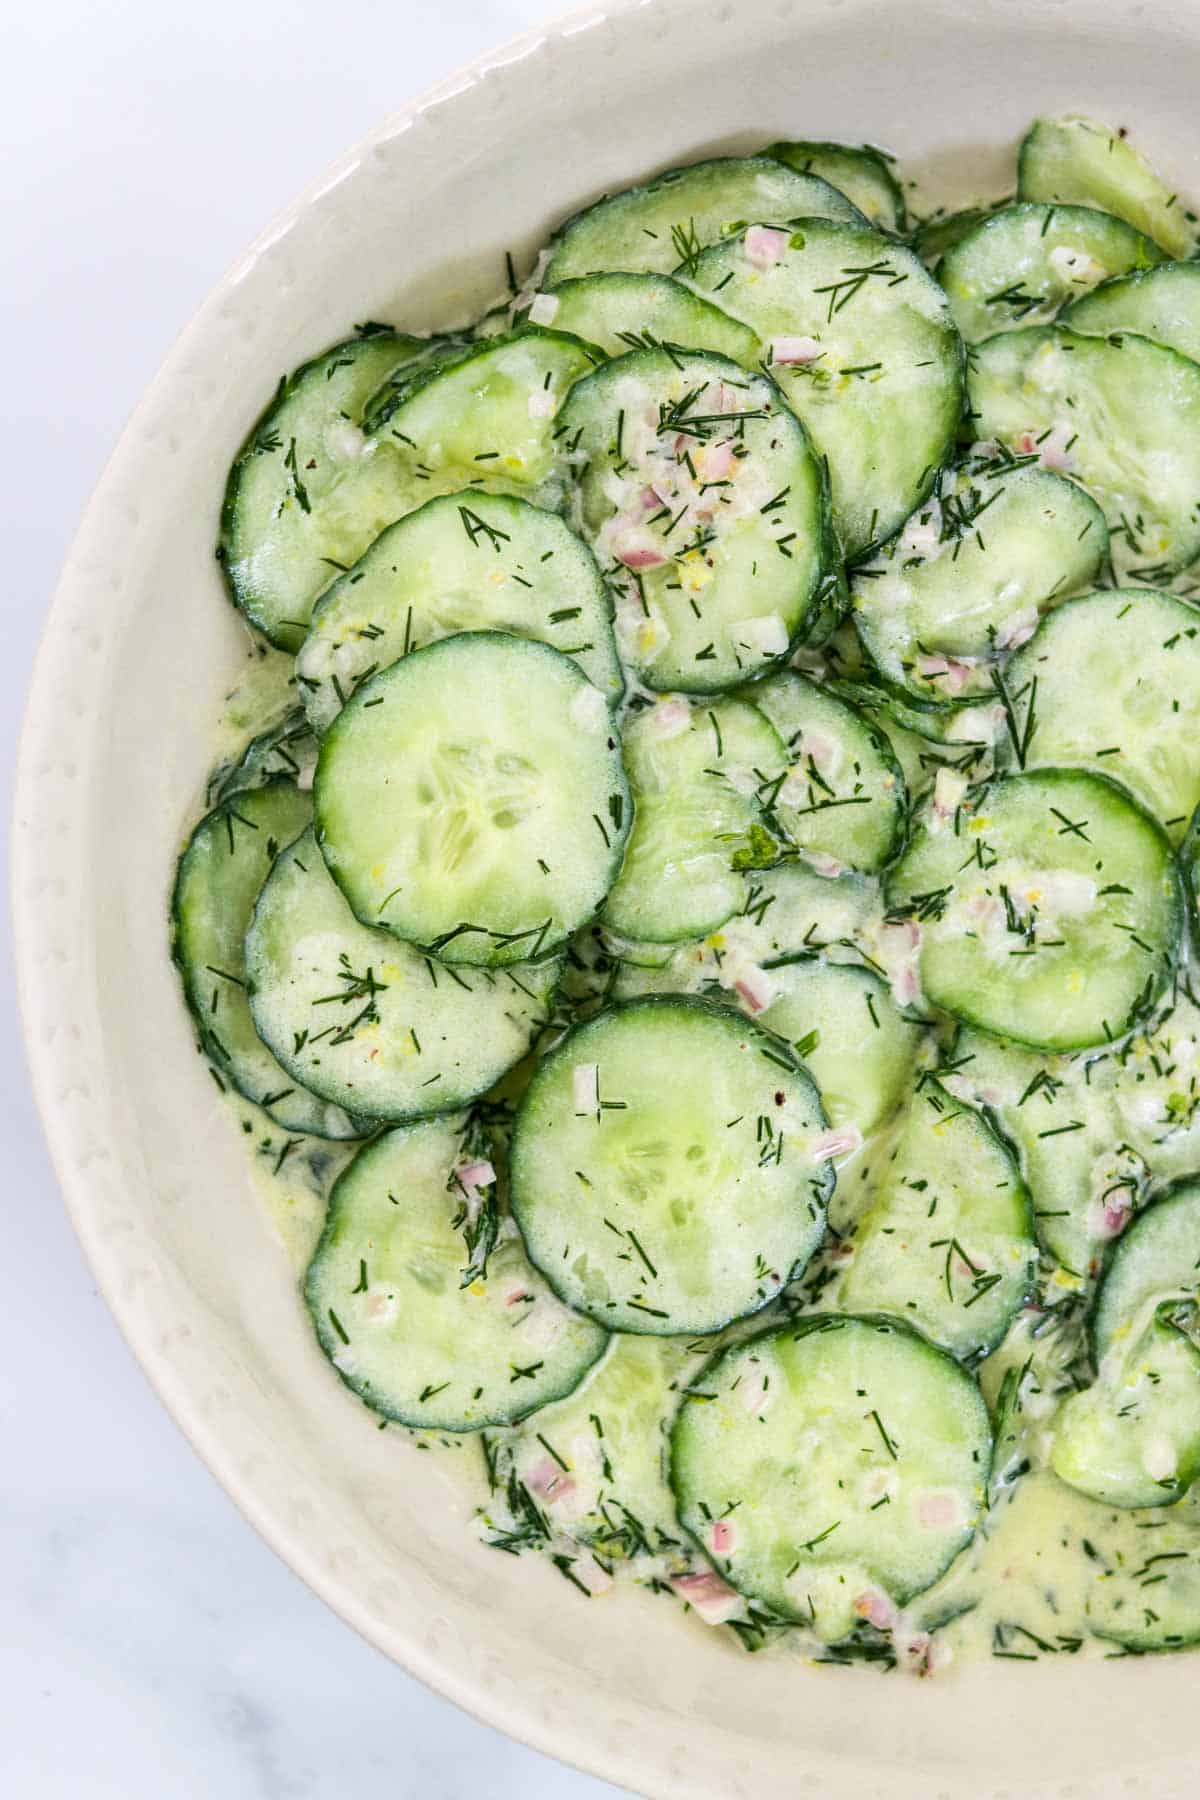 Lemon cucumber salad in a white bowl.